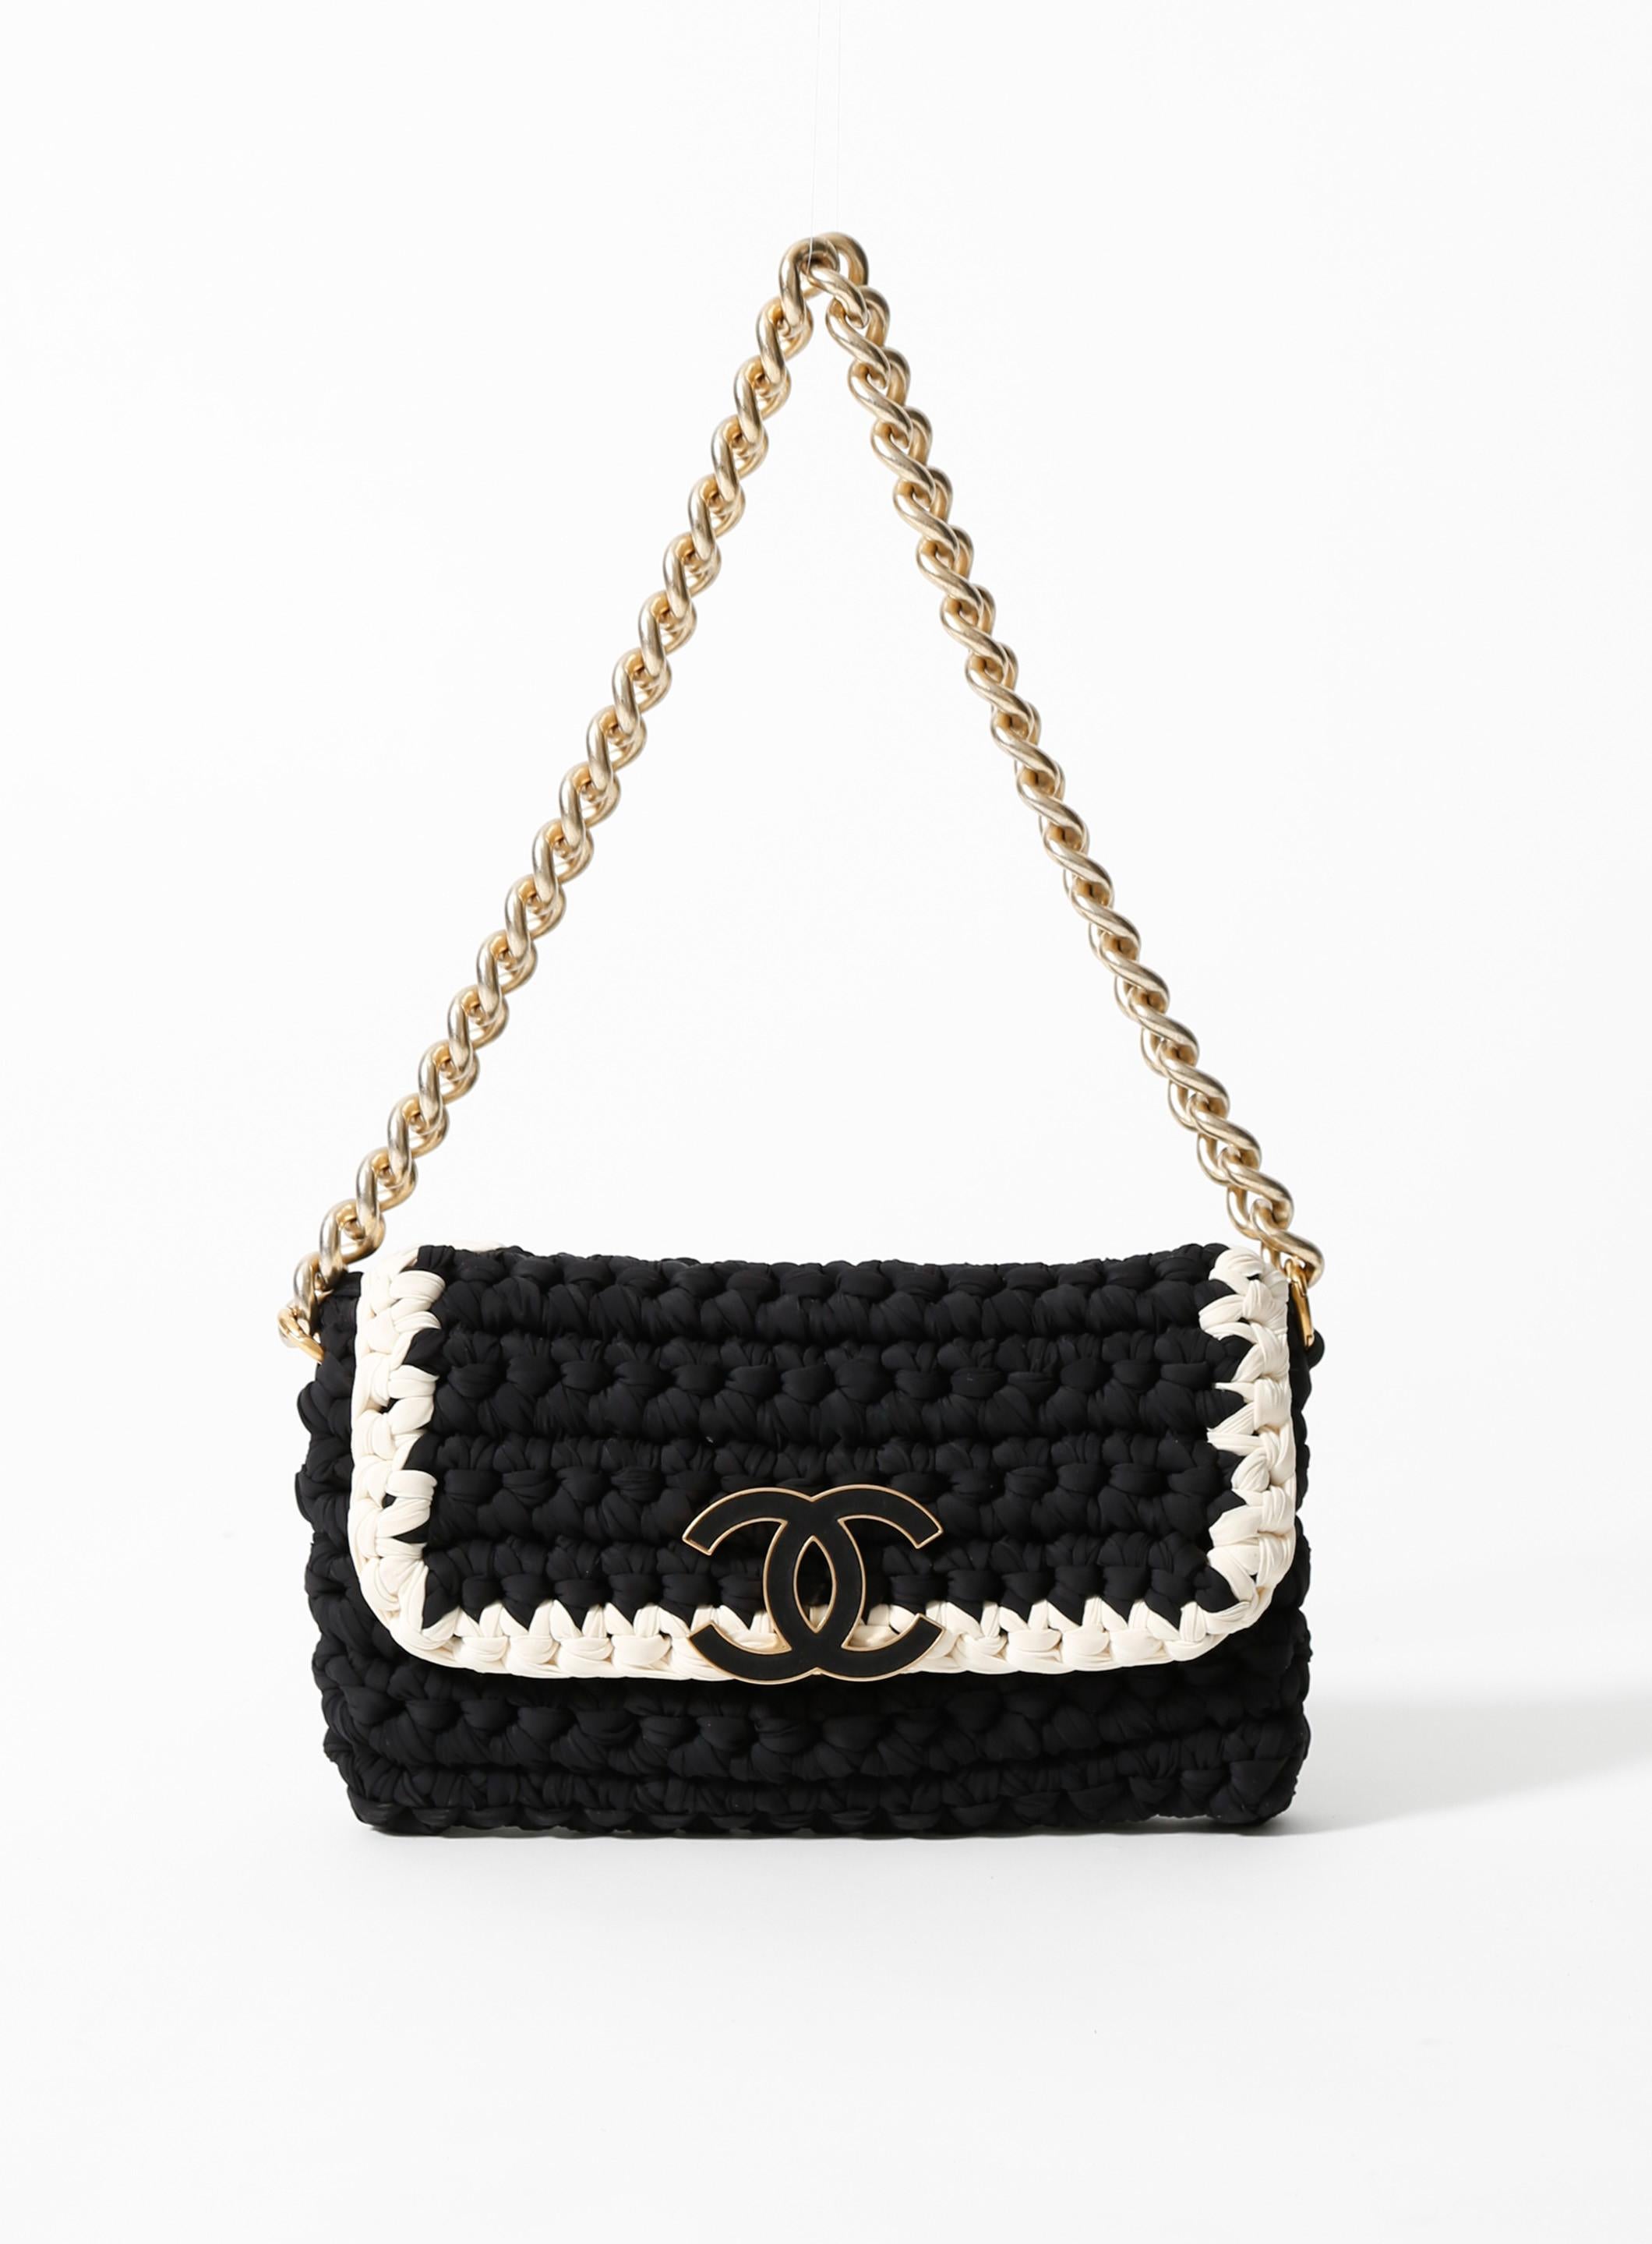 Chanel Interwoven Woven Crochet Bicolor Two Tone Medium Black & White Flap Bag For Sale 3